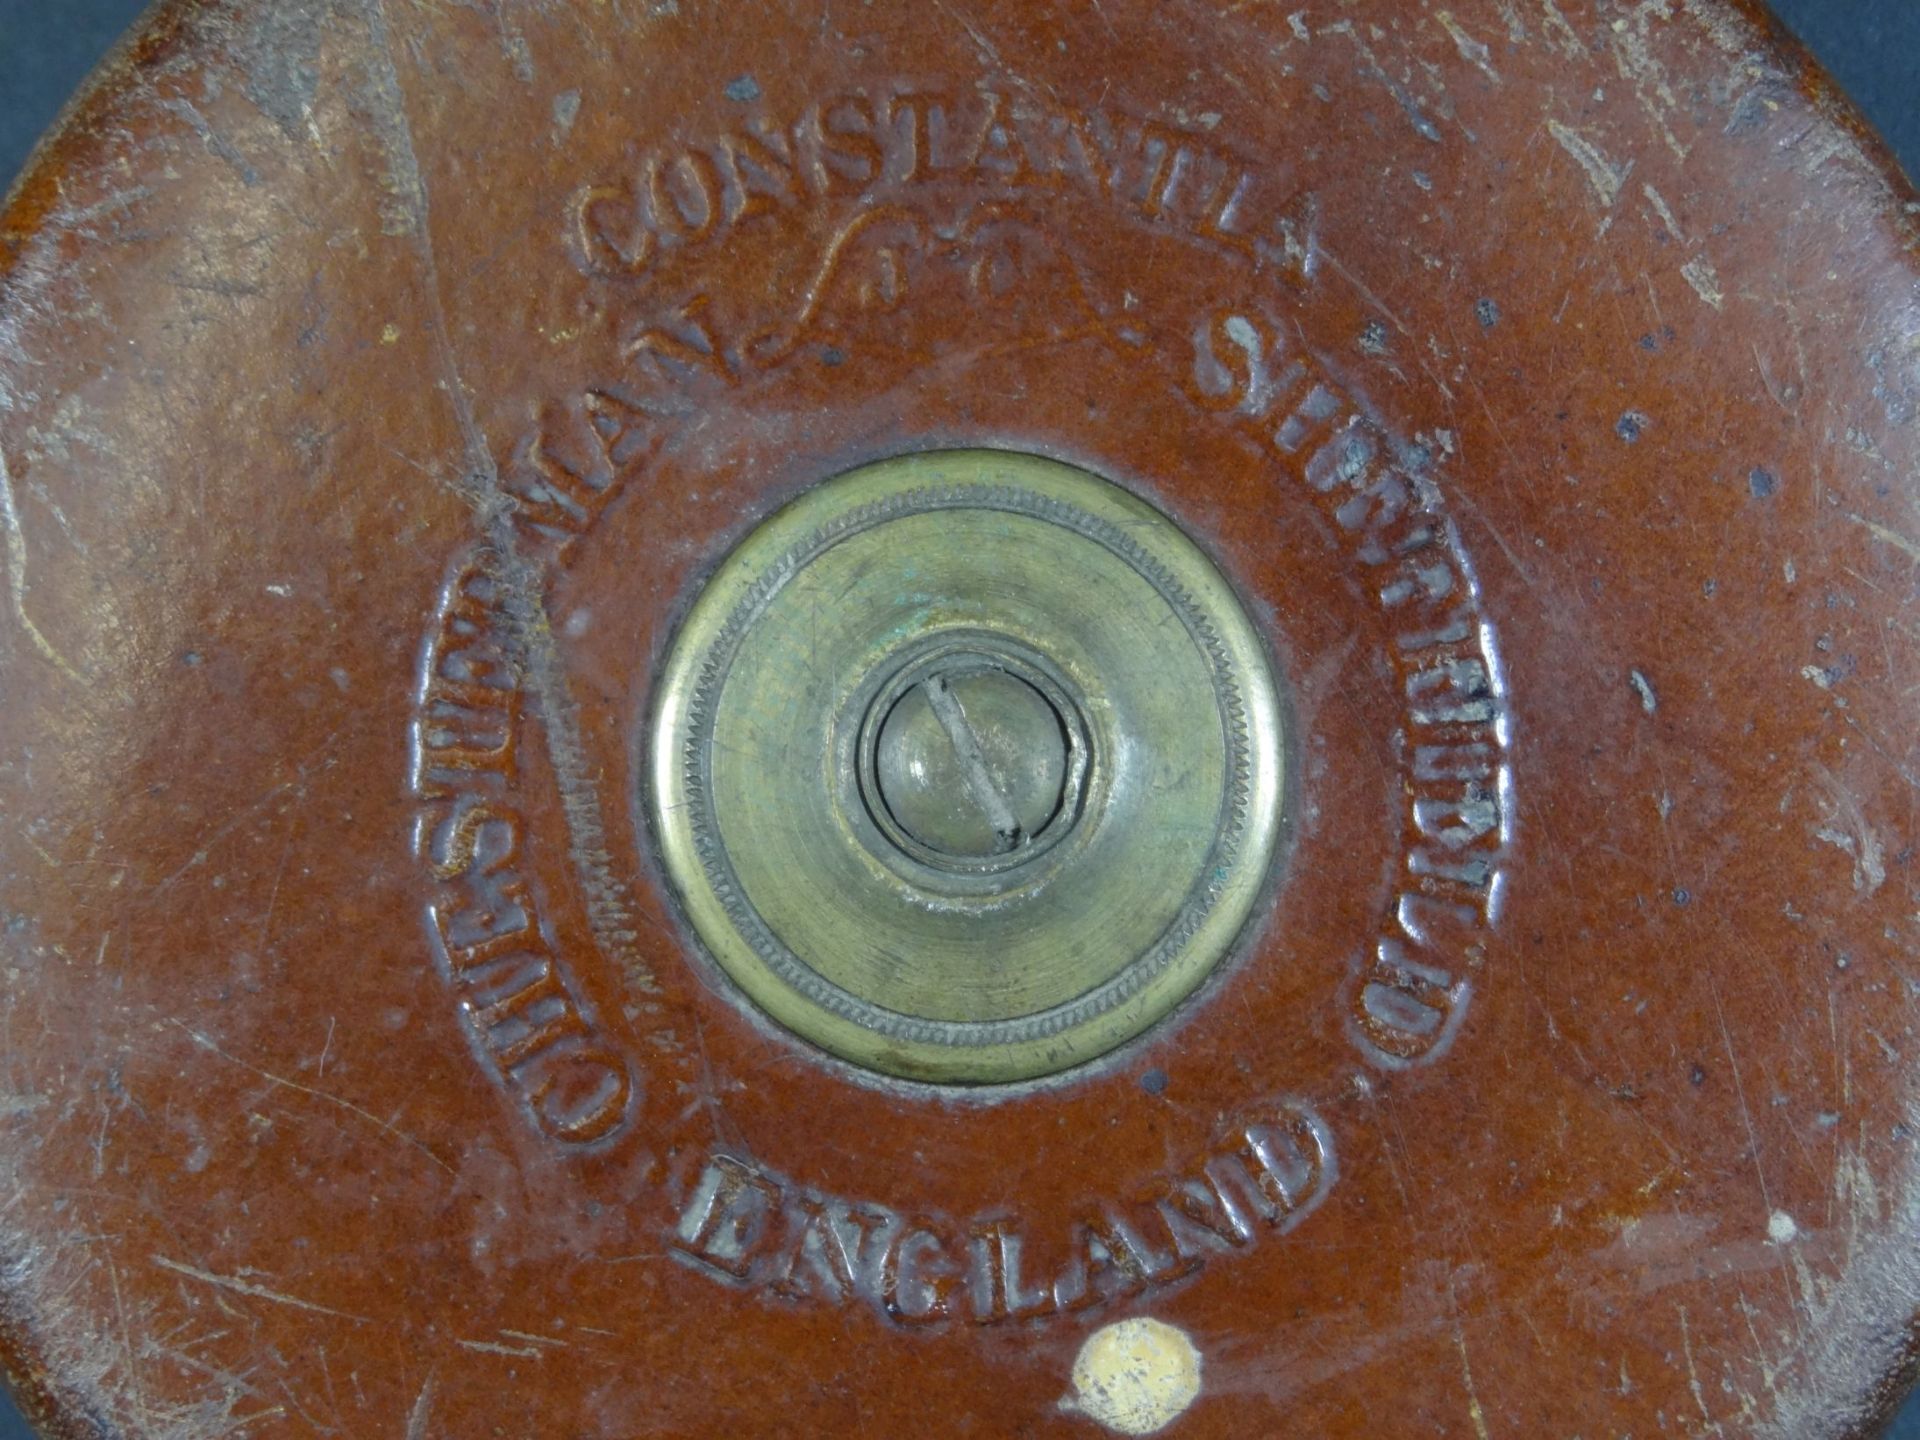 langes Massband zum ausrollen, Lederhülle "Constanta" Sheffield, D-11 cm, Alters-u. Gebrauchsspure - Image 4 of 5